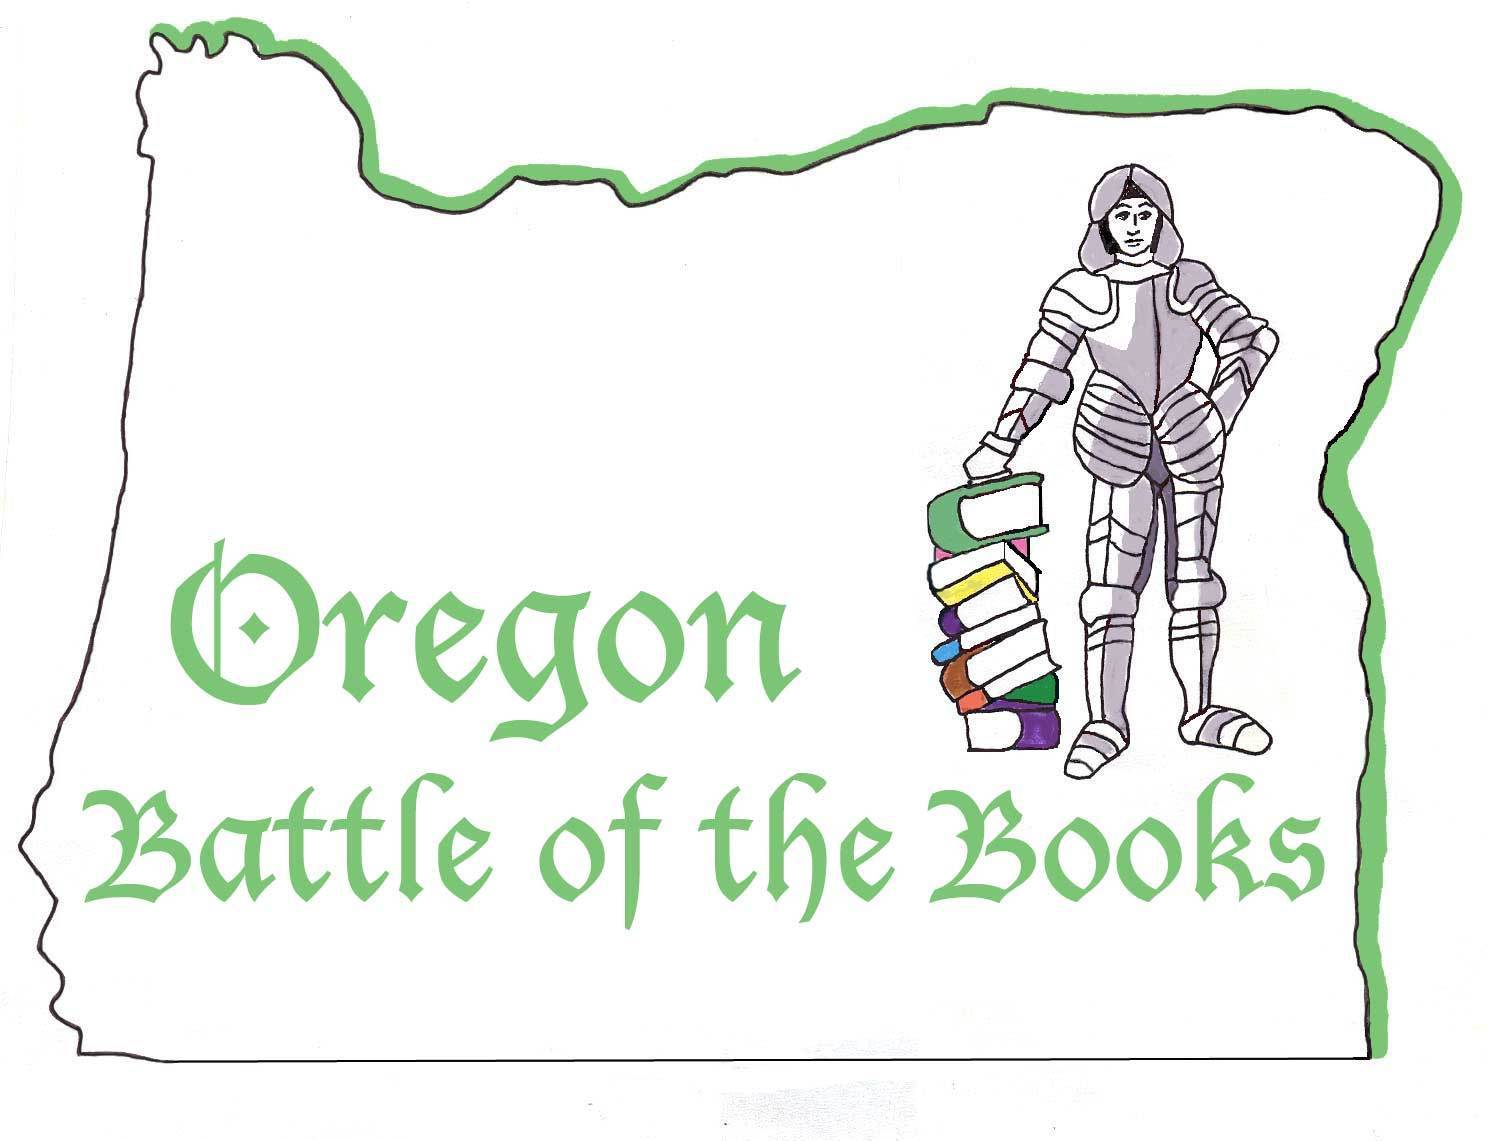 *Oregon Battle of the Books*